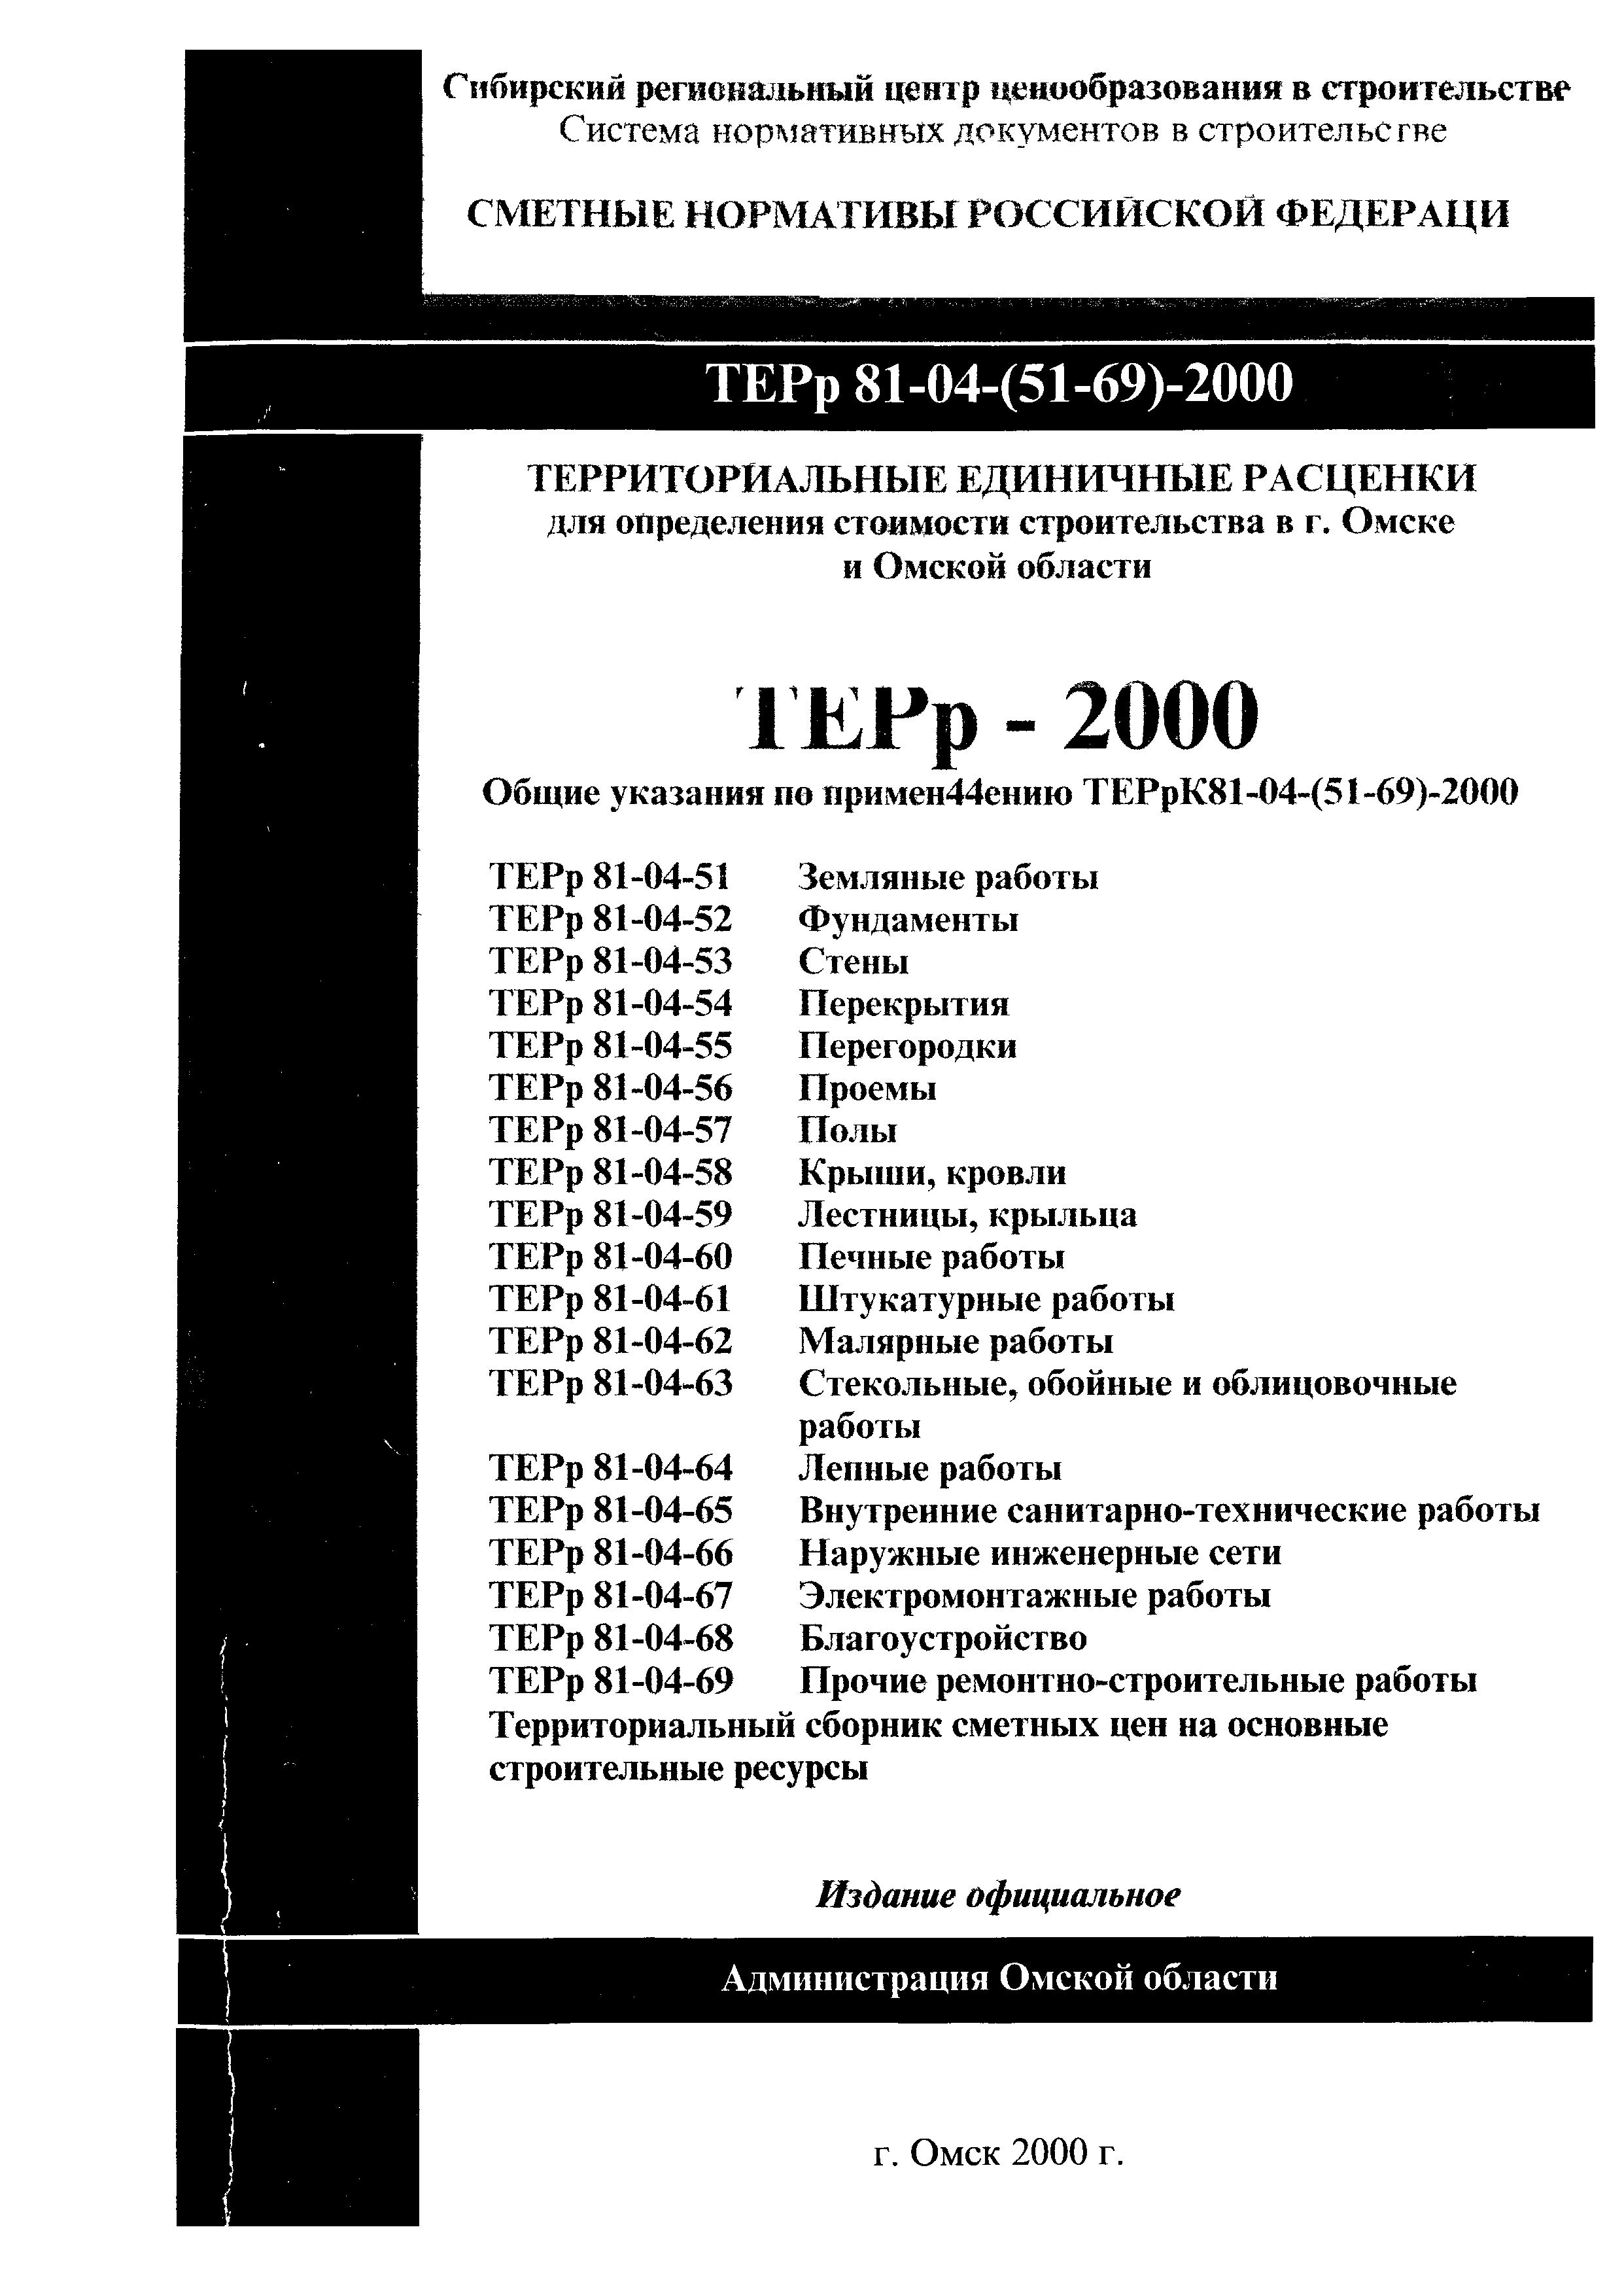 ТЕРр Омской области 2000-57